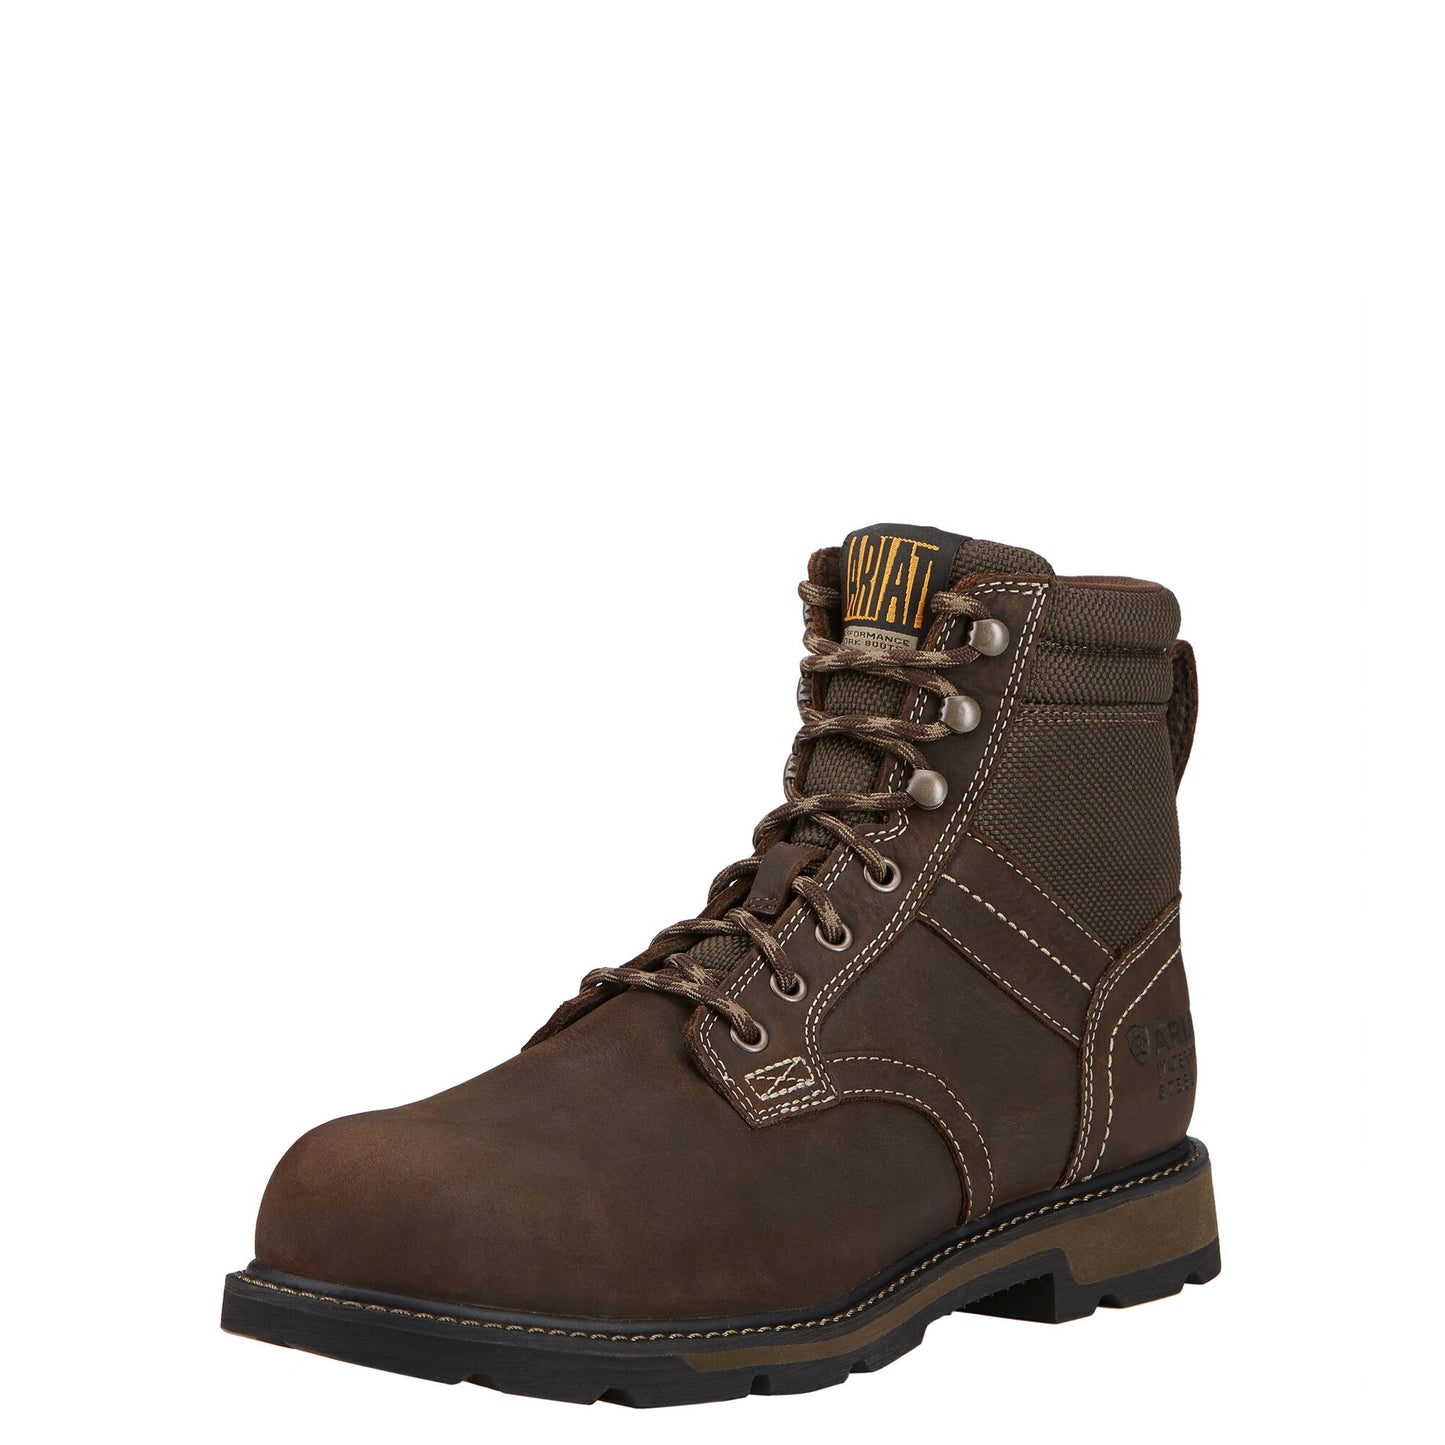 Ariat Men's Groundbreaker 6" H2O Steel Toe Boot - Dark Brown - French's Boots